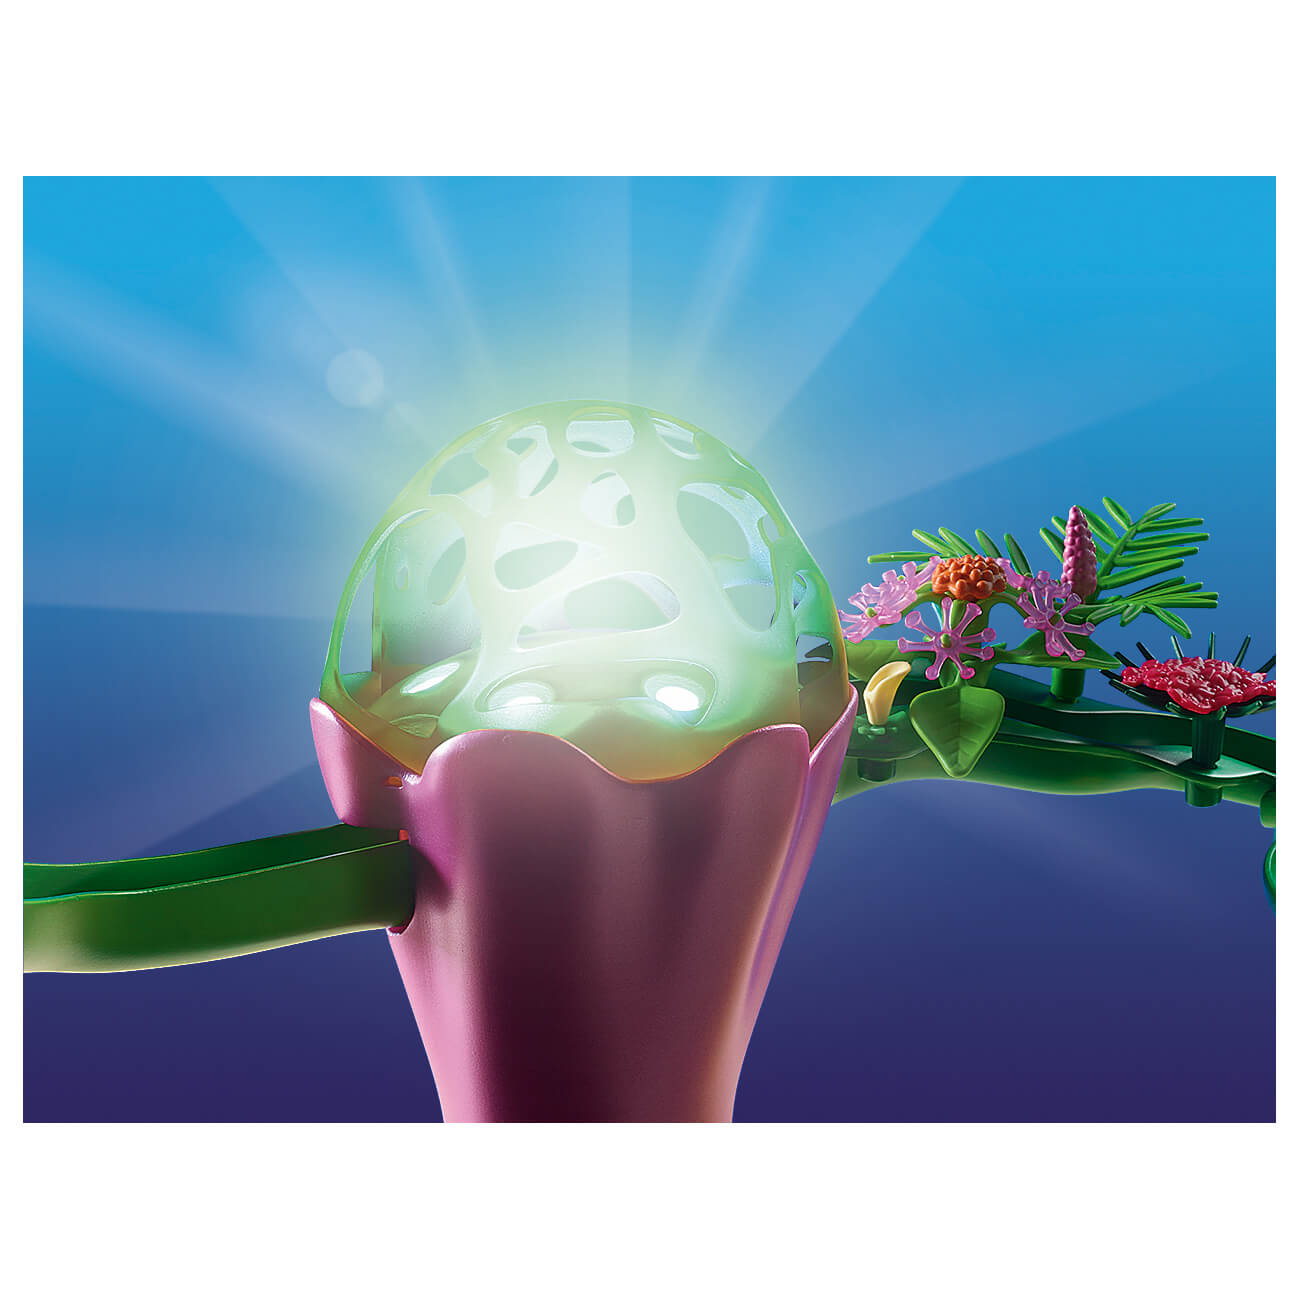 PLAYMOBIL Magical Mermaids Mermaid Cove with Illuminated Dome (70094)